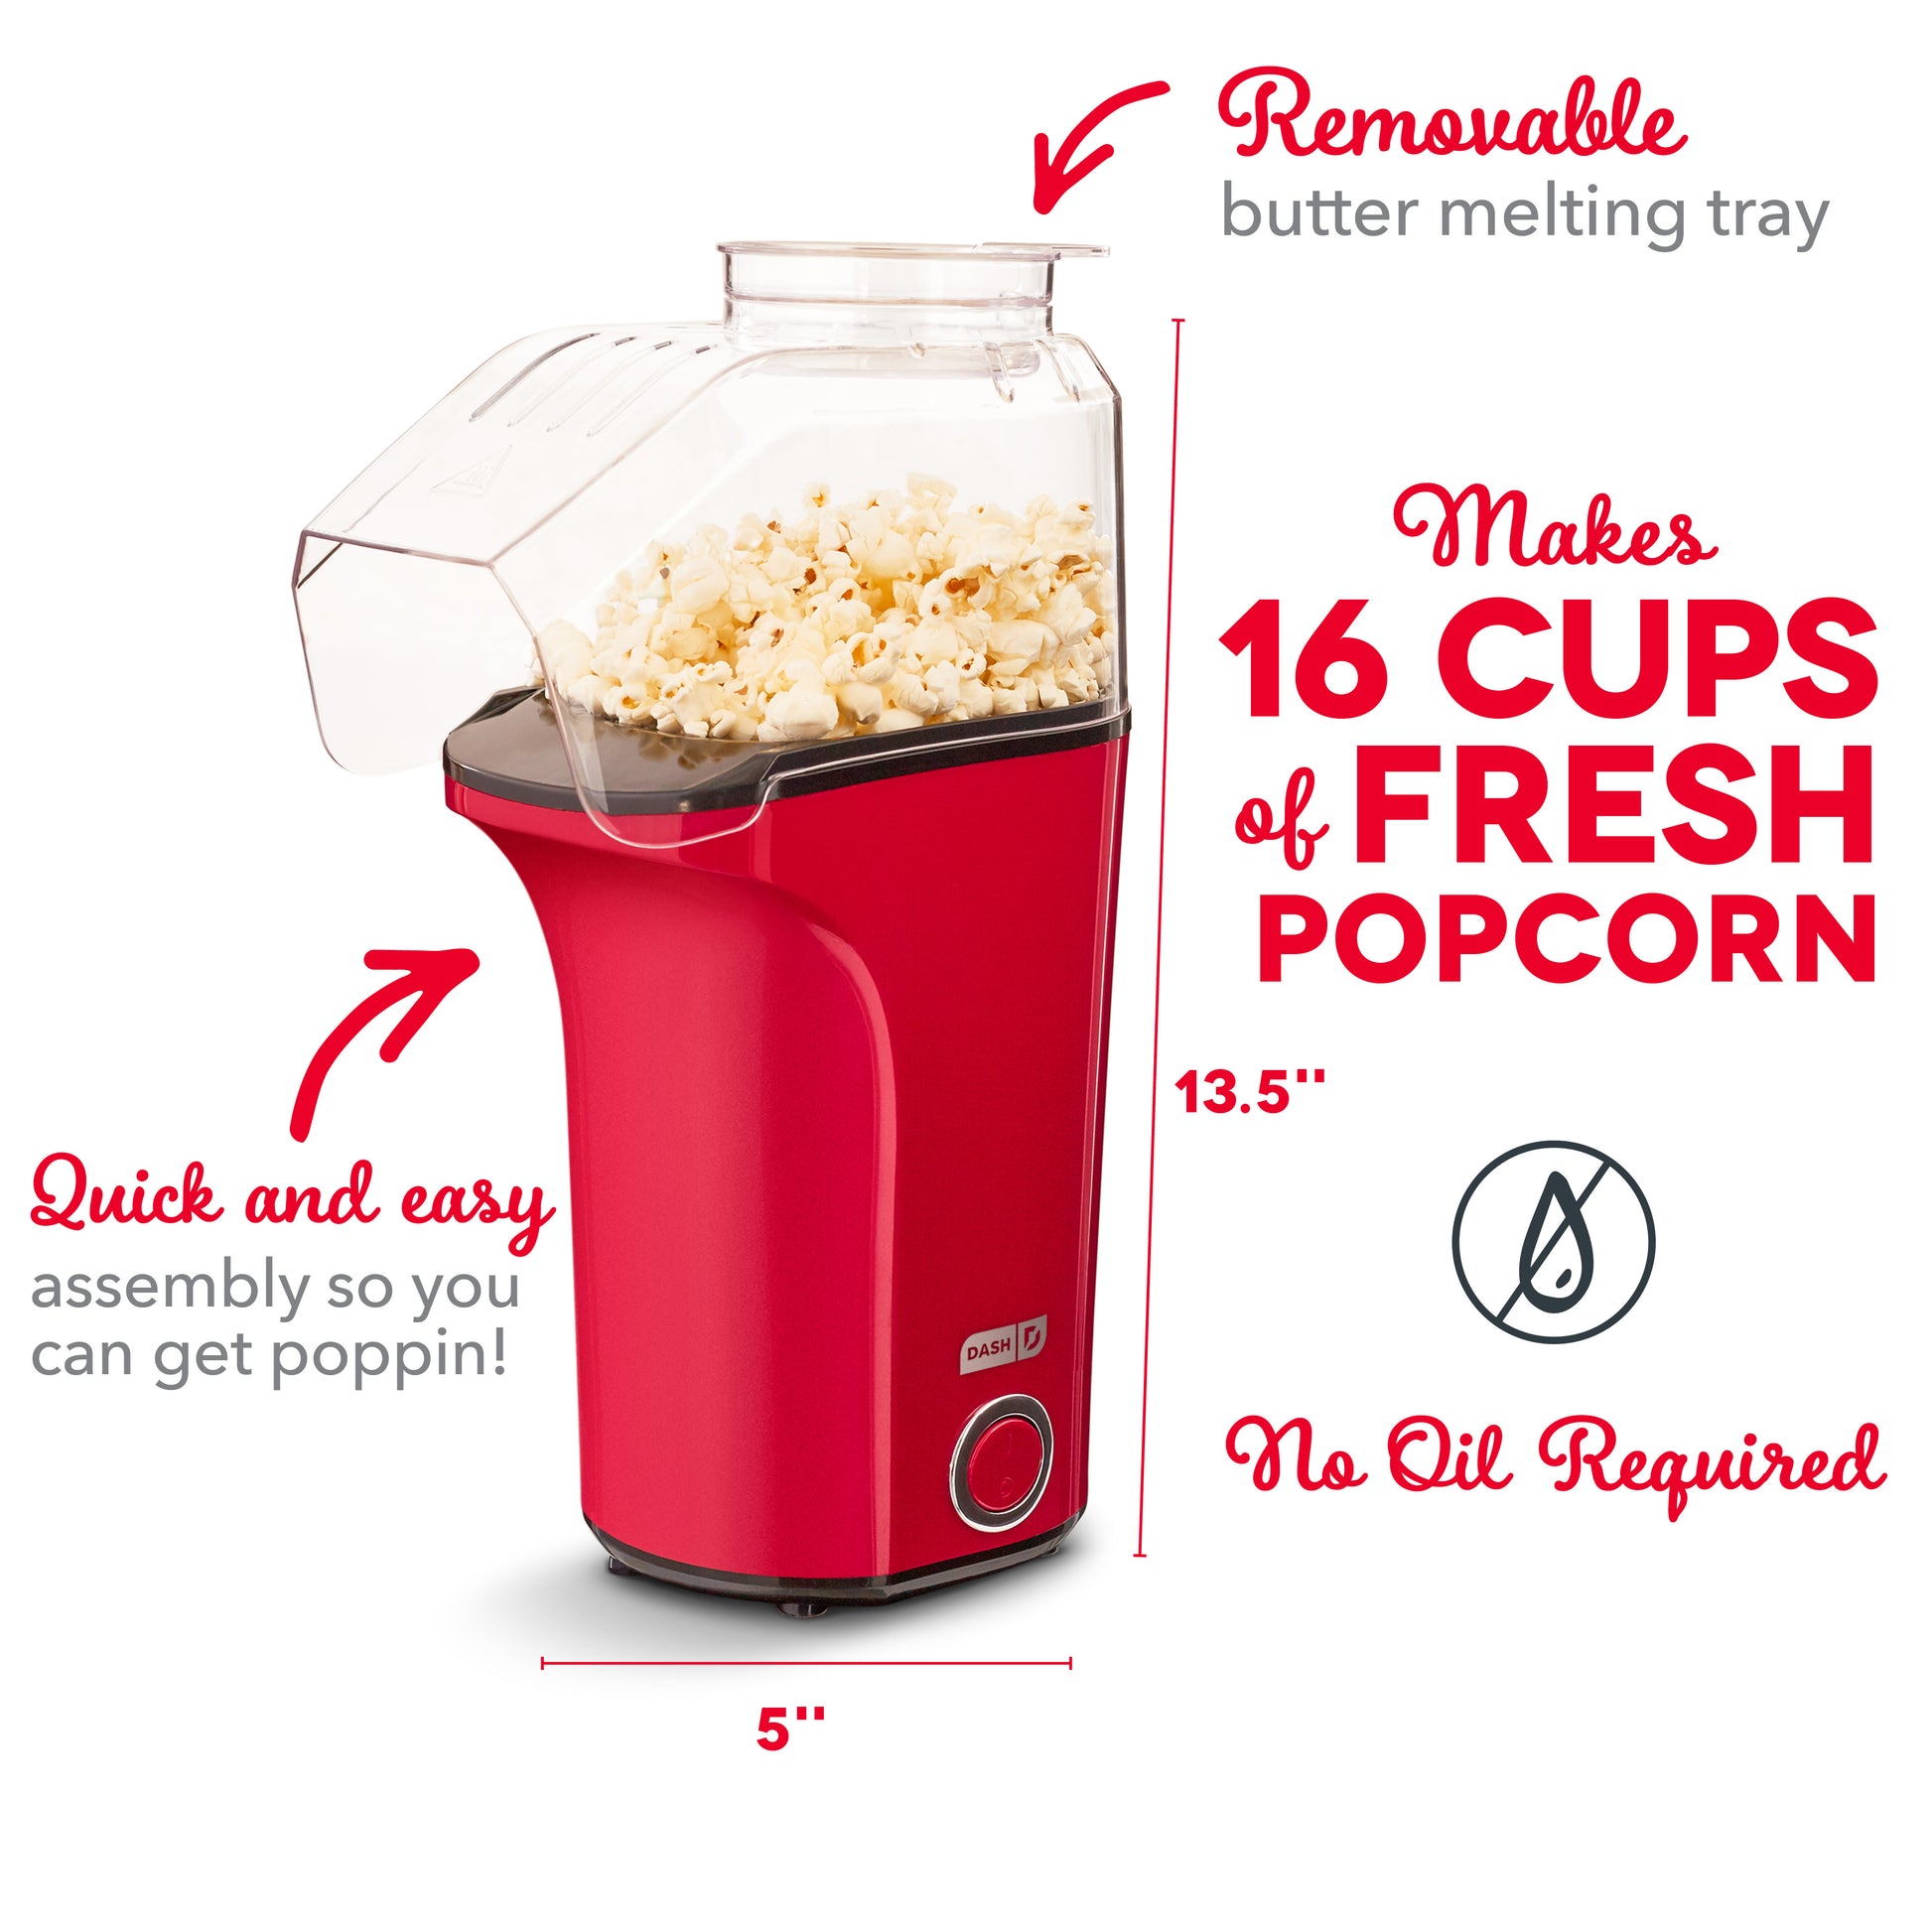 Alex by DASH Hot Air 16-Cup Popcorn Maker 